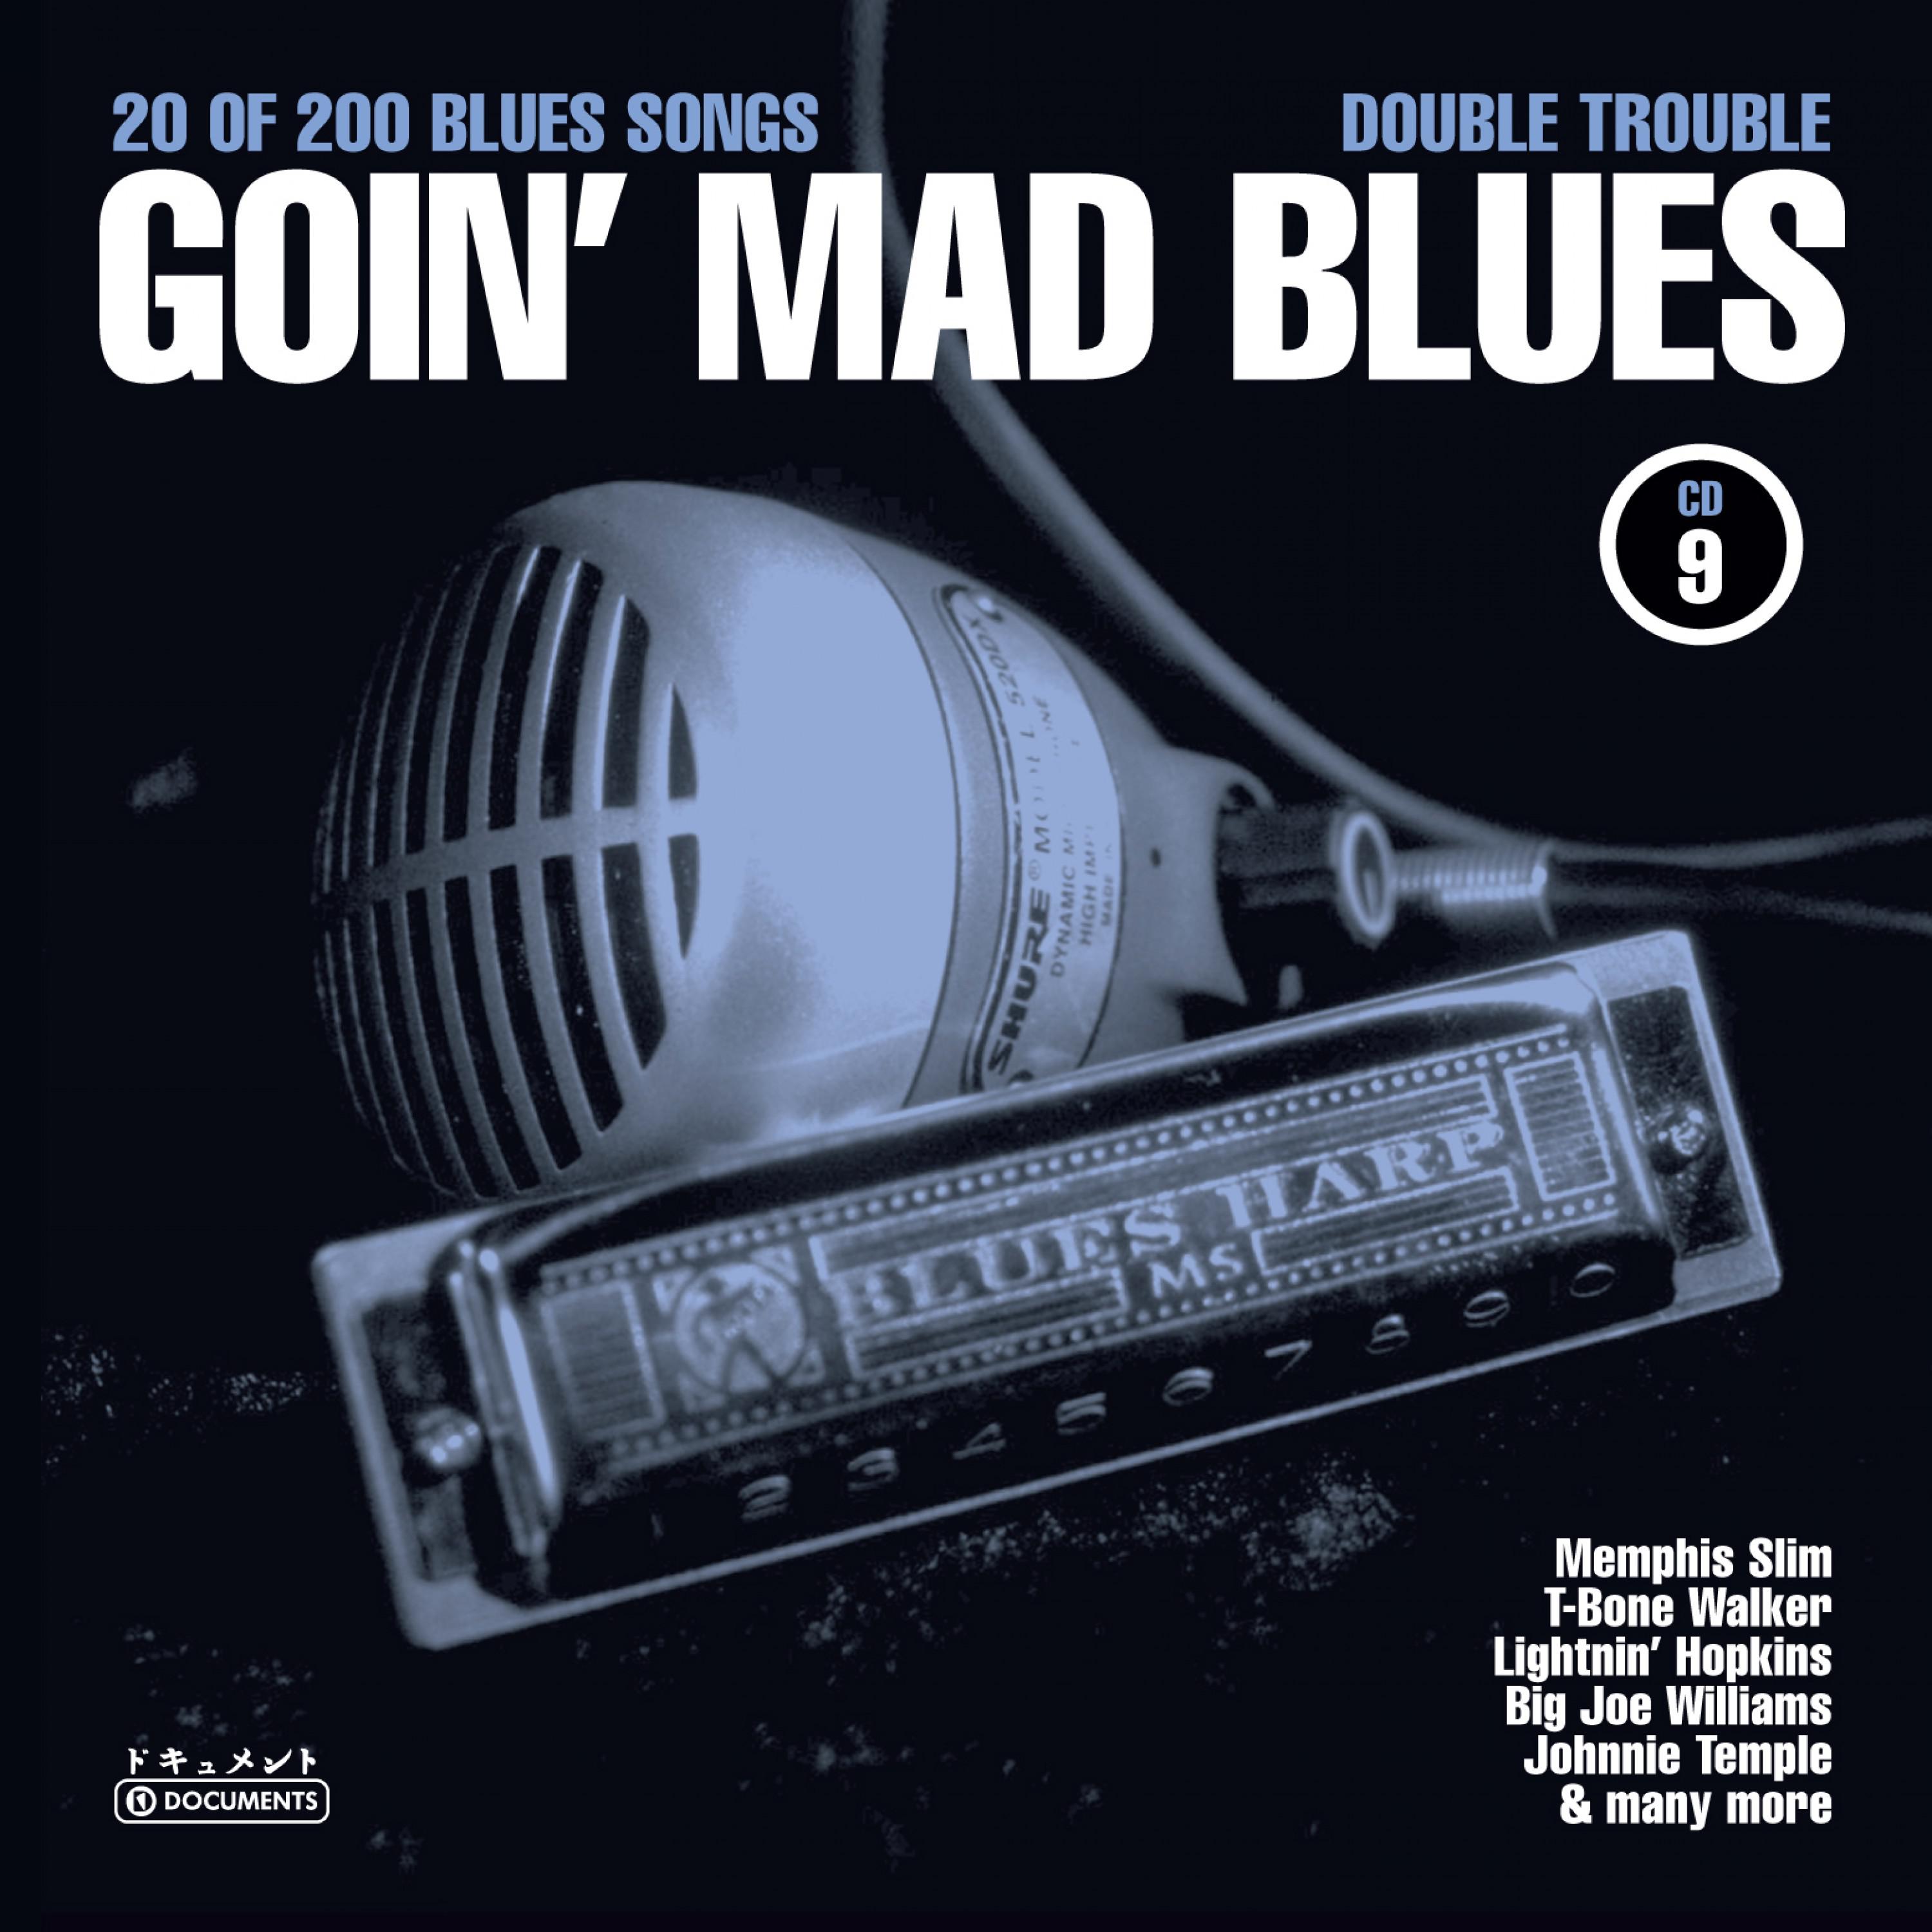 Goin' Mad Blues Vol. 9